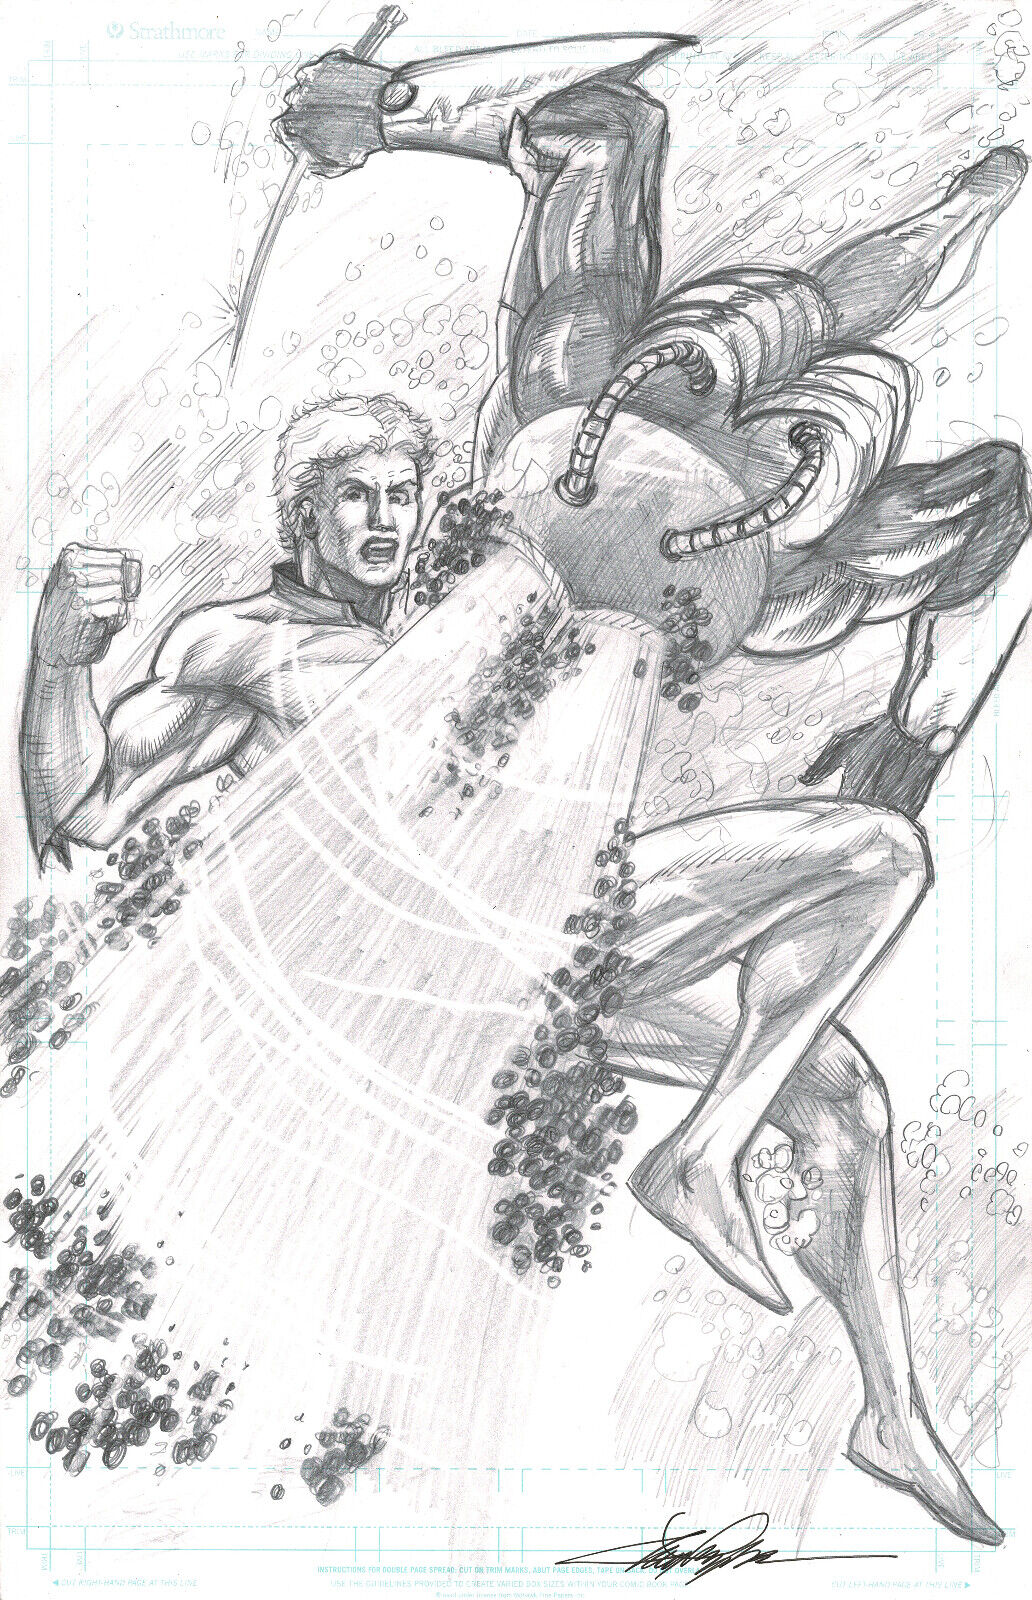 Aquaman vs. Black Manta - Original Comic Art by Jay Taylor